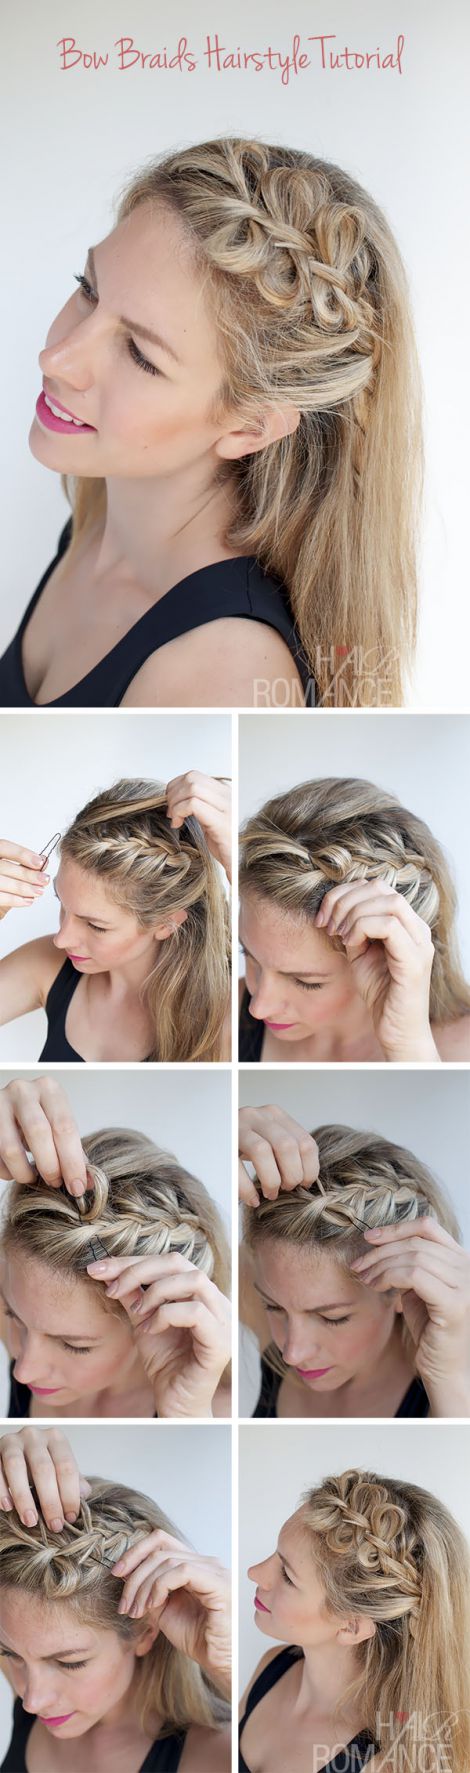 hair-romance-bow-braids-hairstyle-tutorial-how-to.jpg (129.02 Kb)